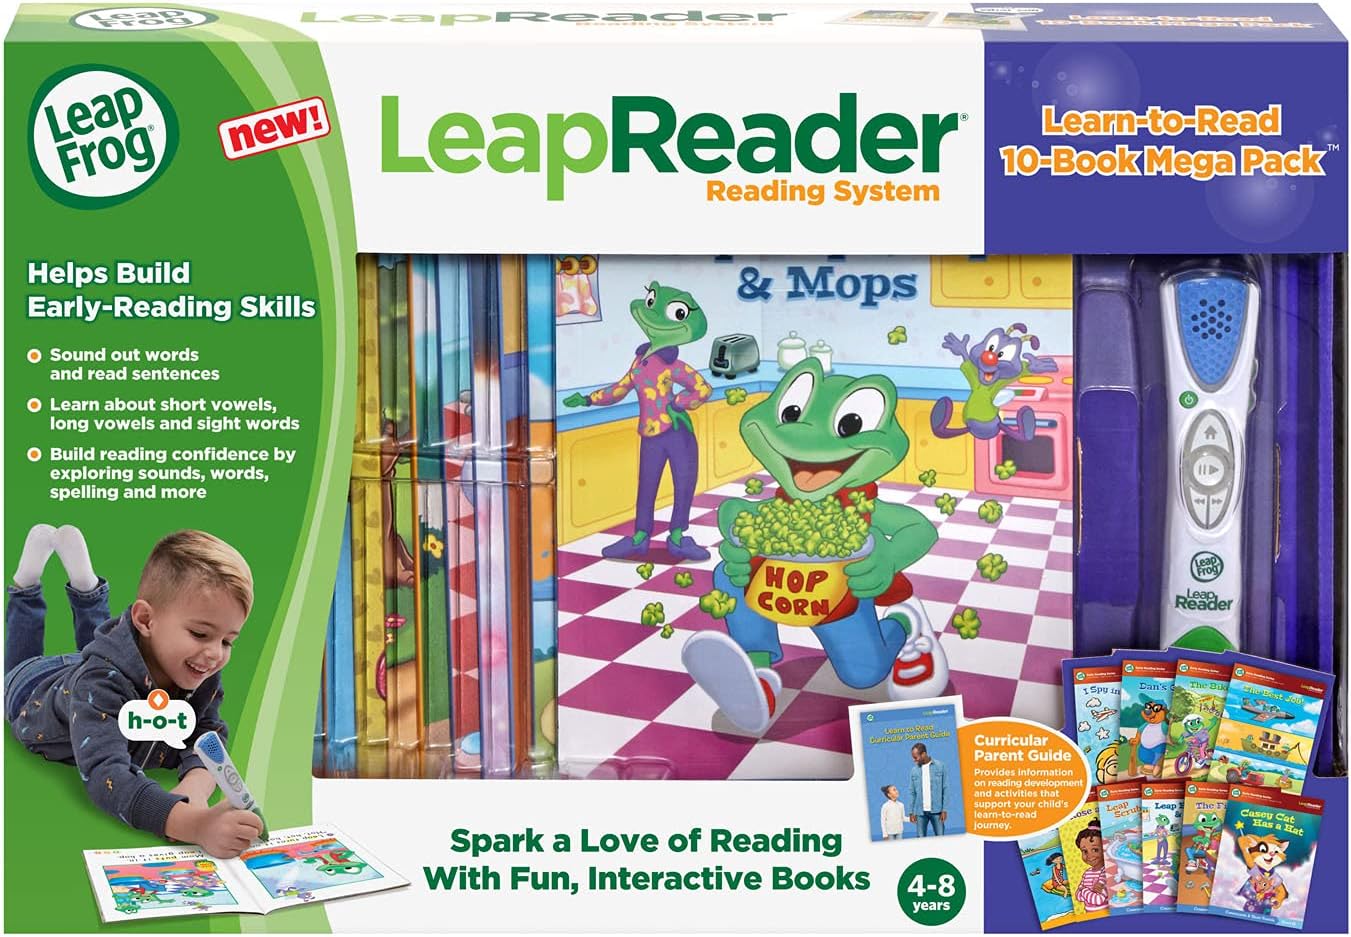 New - LeapFrog LeapReader Learn-to-Read 10-Book Mega Pack